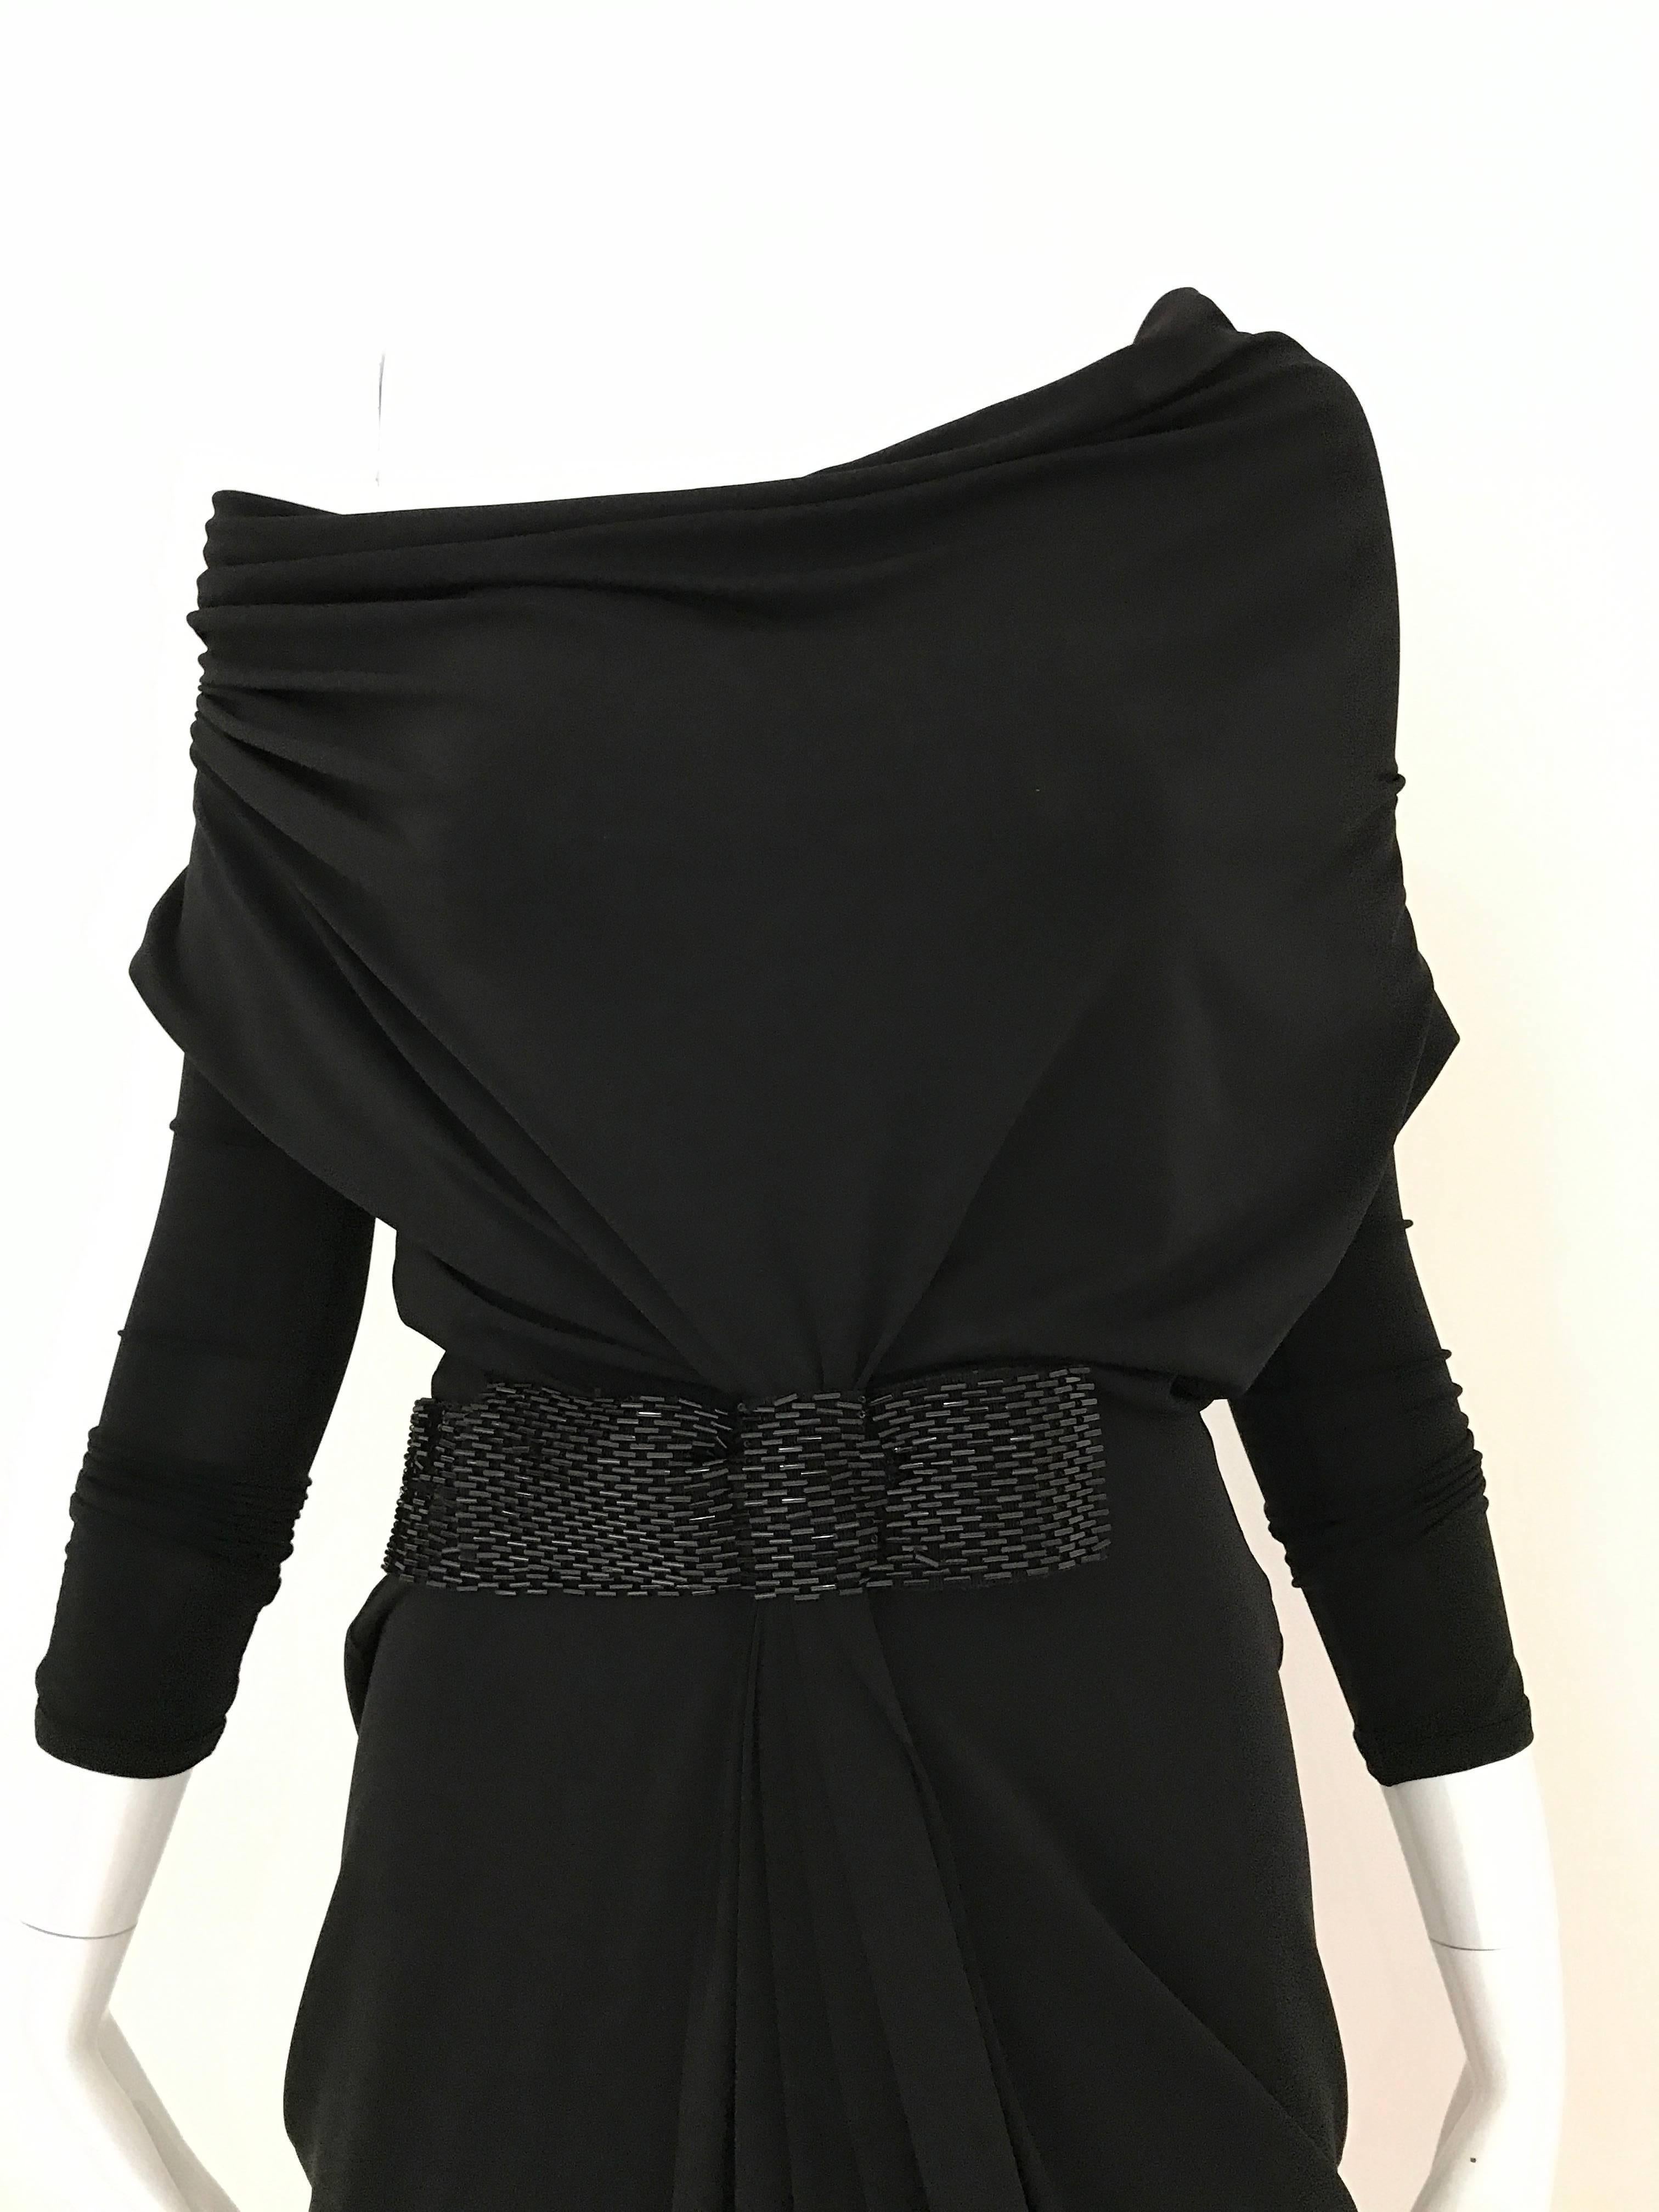 1990s Gianfranco Ferre Black Knit Jersey Cocktail Dress For Sale 2